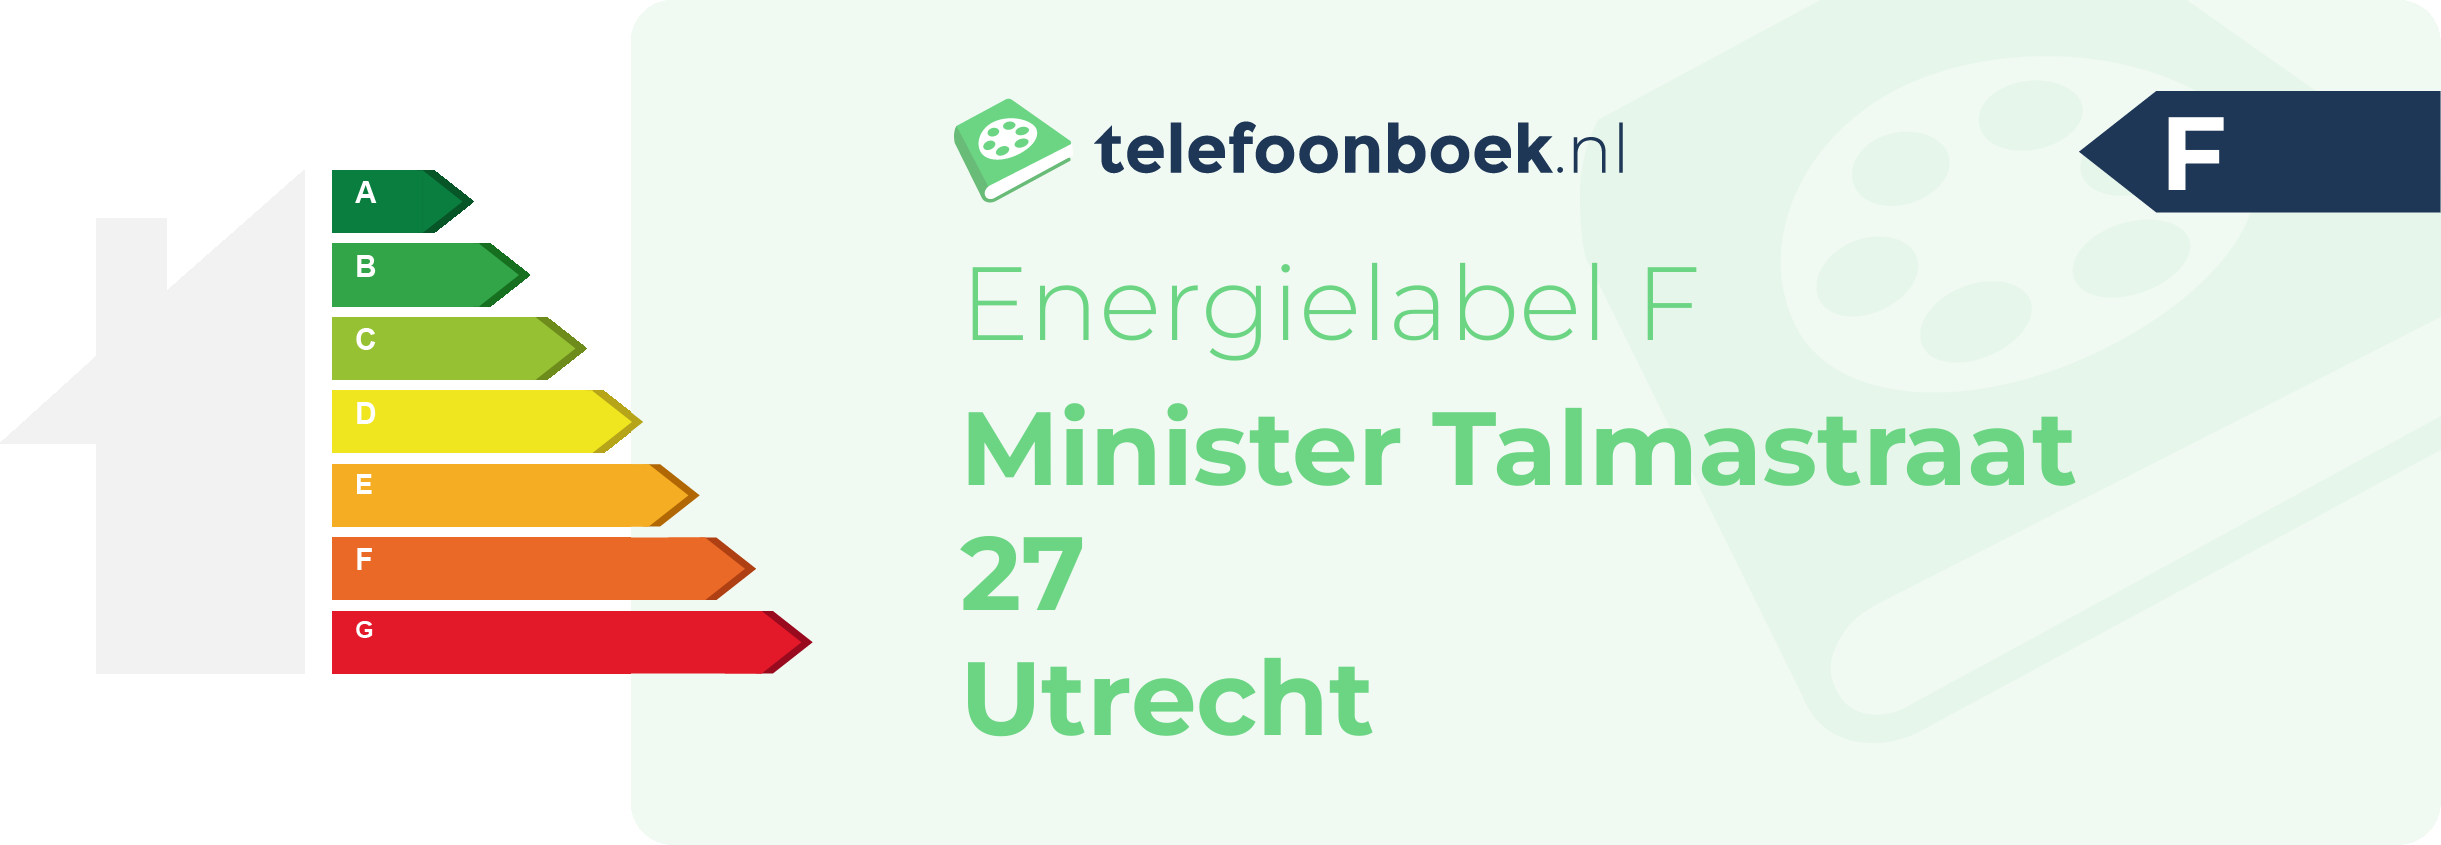 Energielabel Minister Talmastraat 27 Utrecht